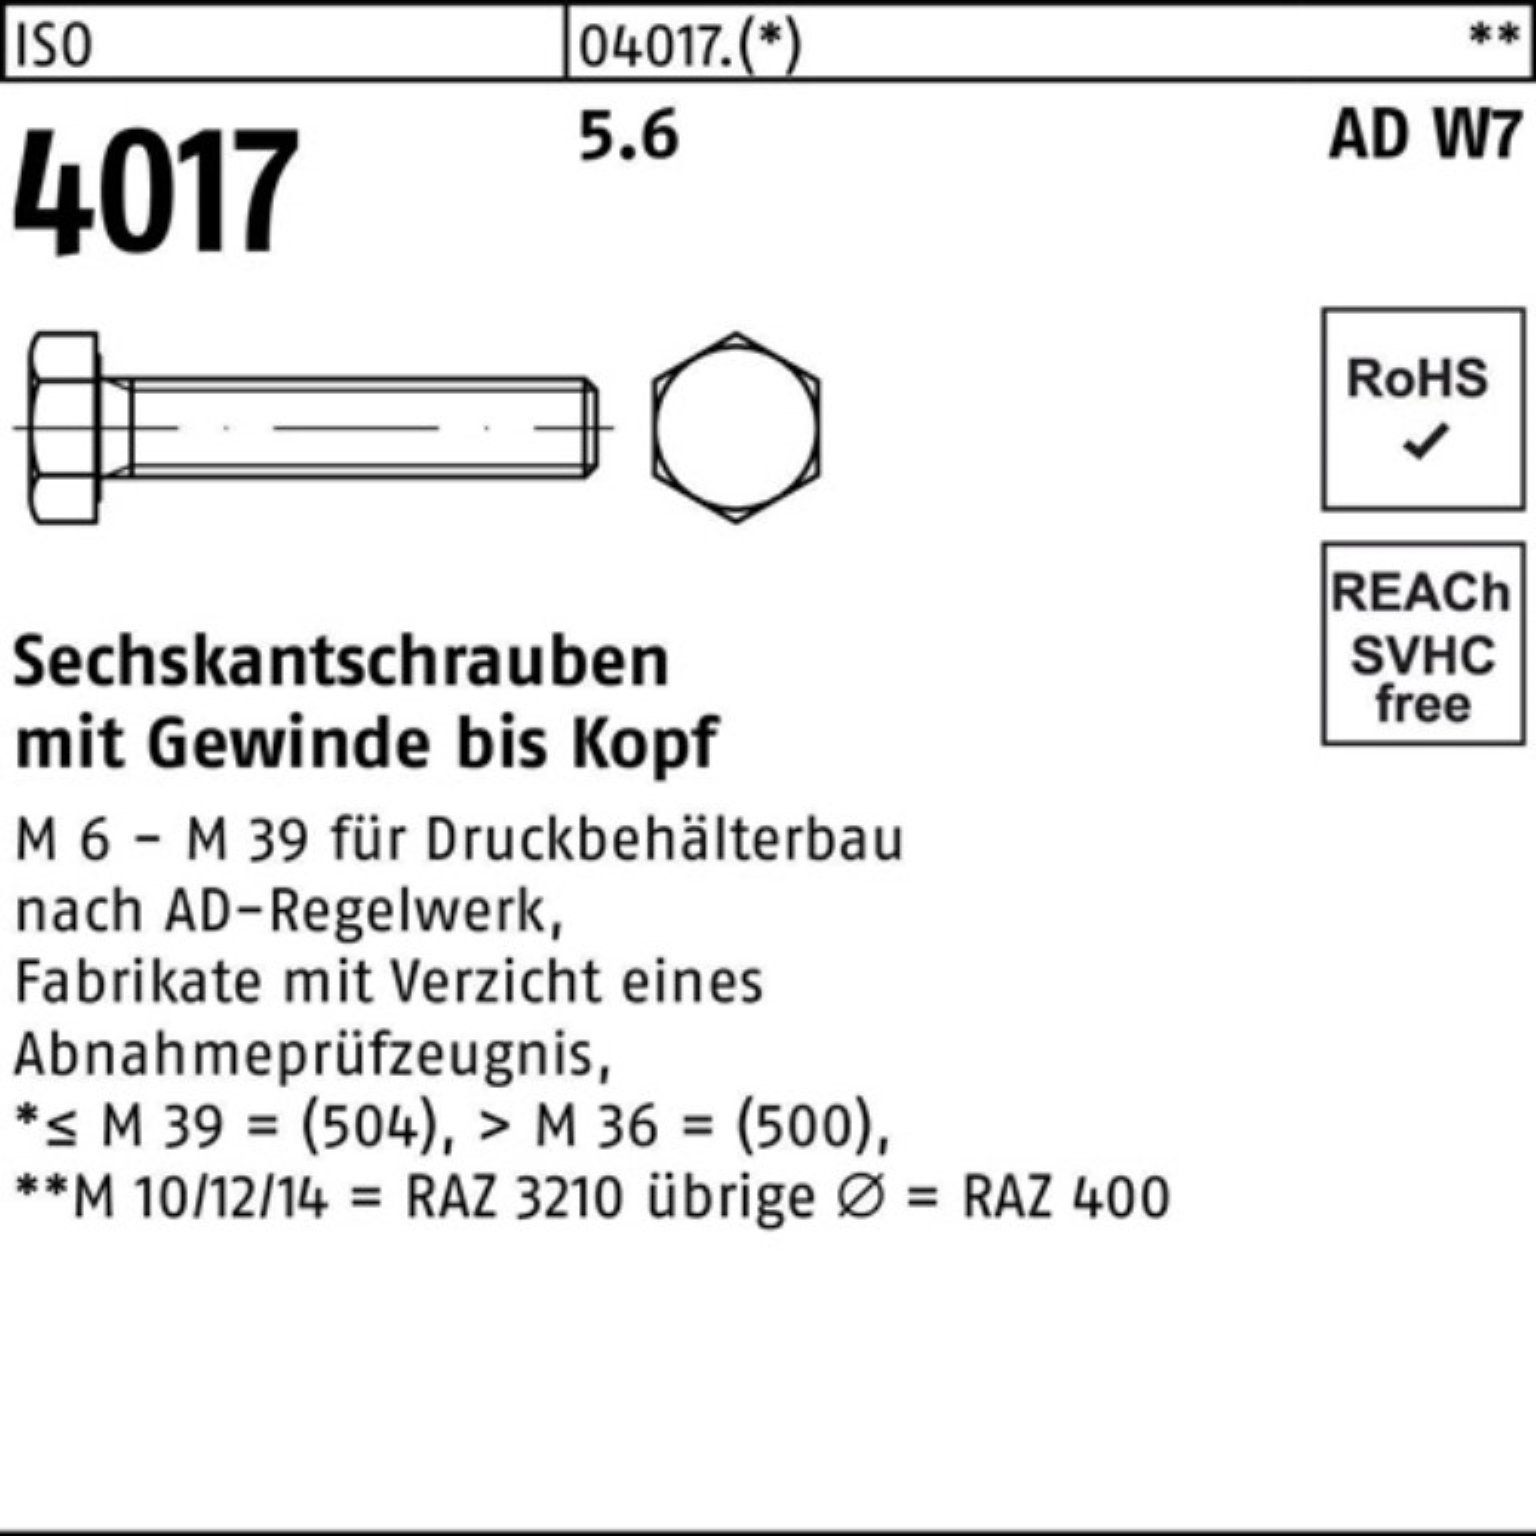 Bufab Sechskantschraube 100er Pack Sechskantschraube ISO 4017 VG M20x 40 5.6 AD W7 25 Stück I